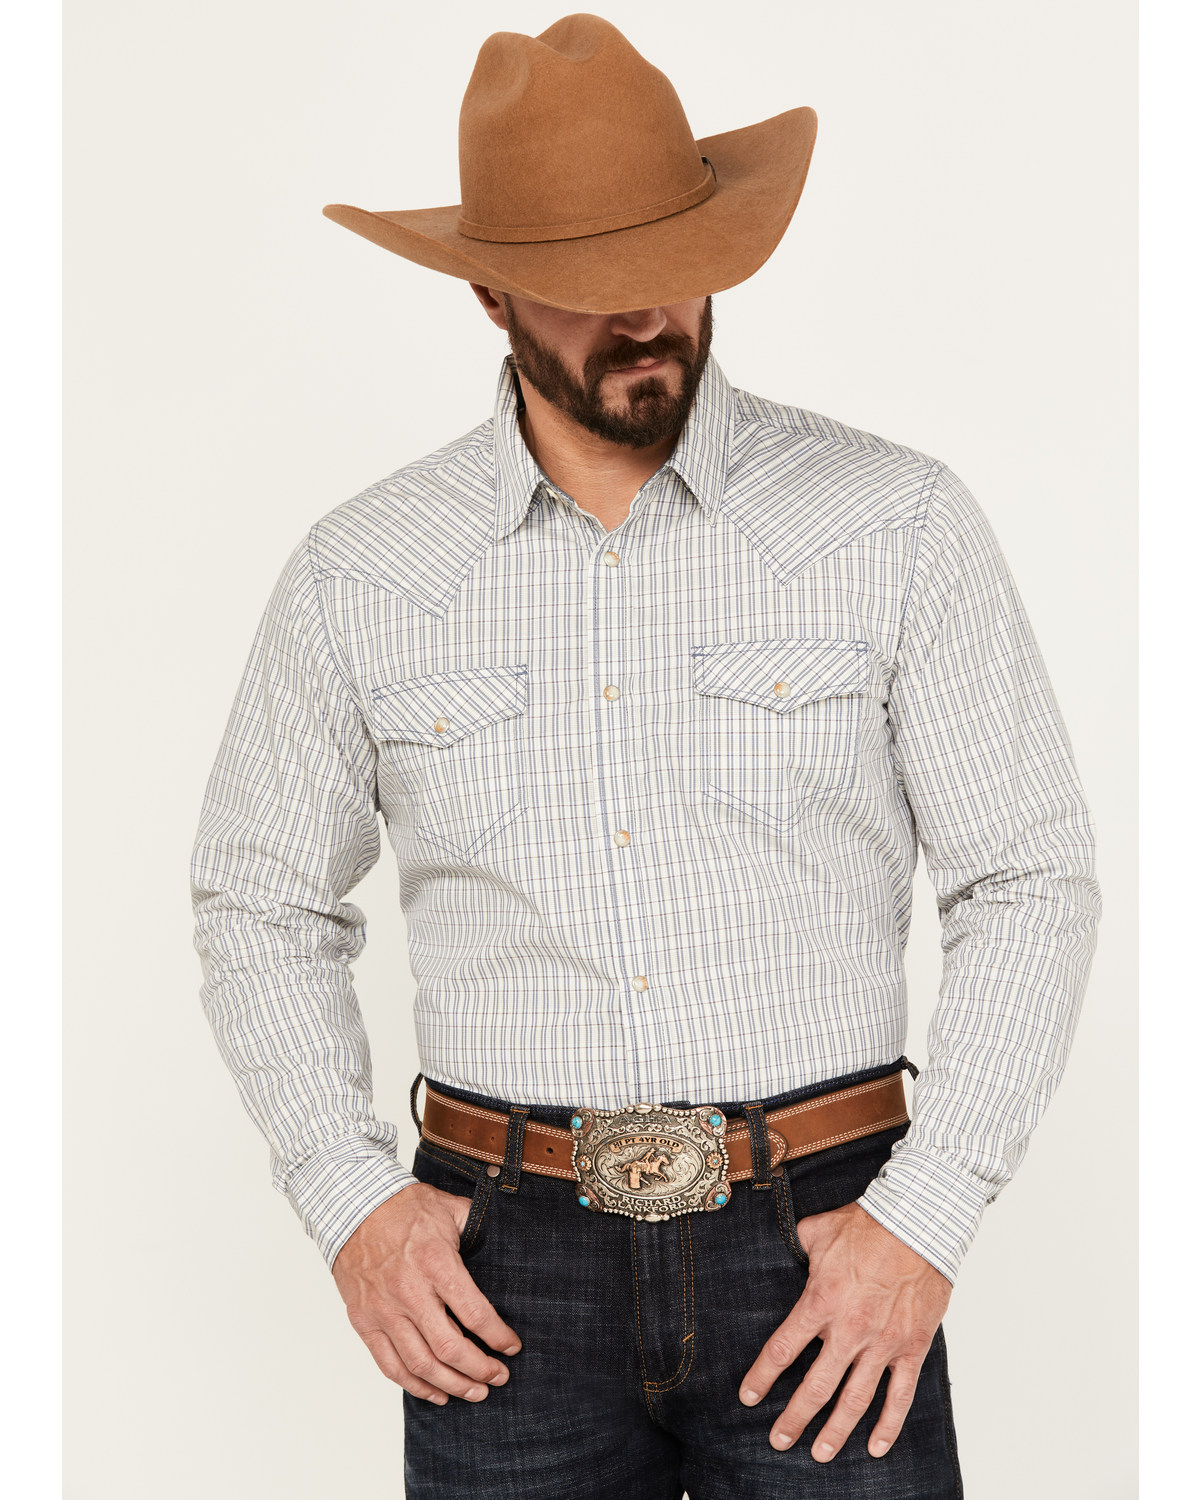 Cody James Men's Jackrabbit Plaid Print Long Sleeve Pearl Snap Western Shirt